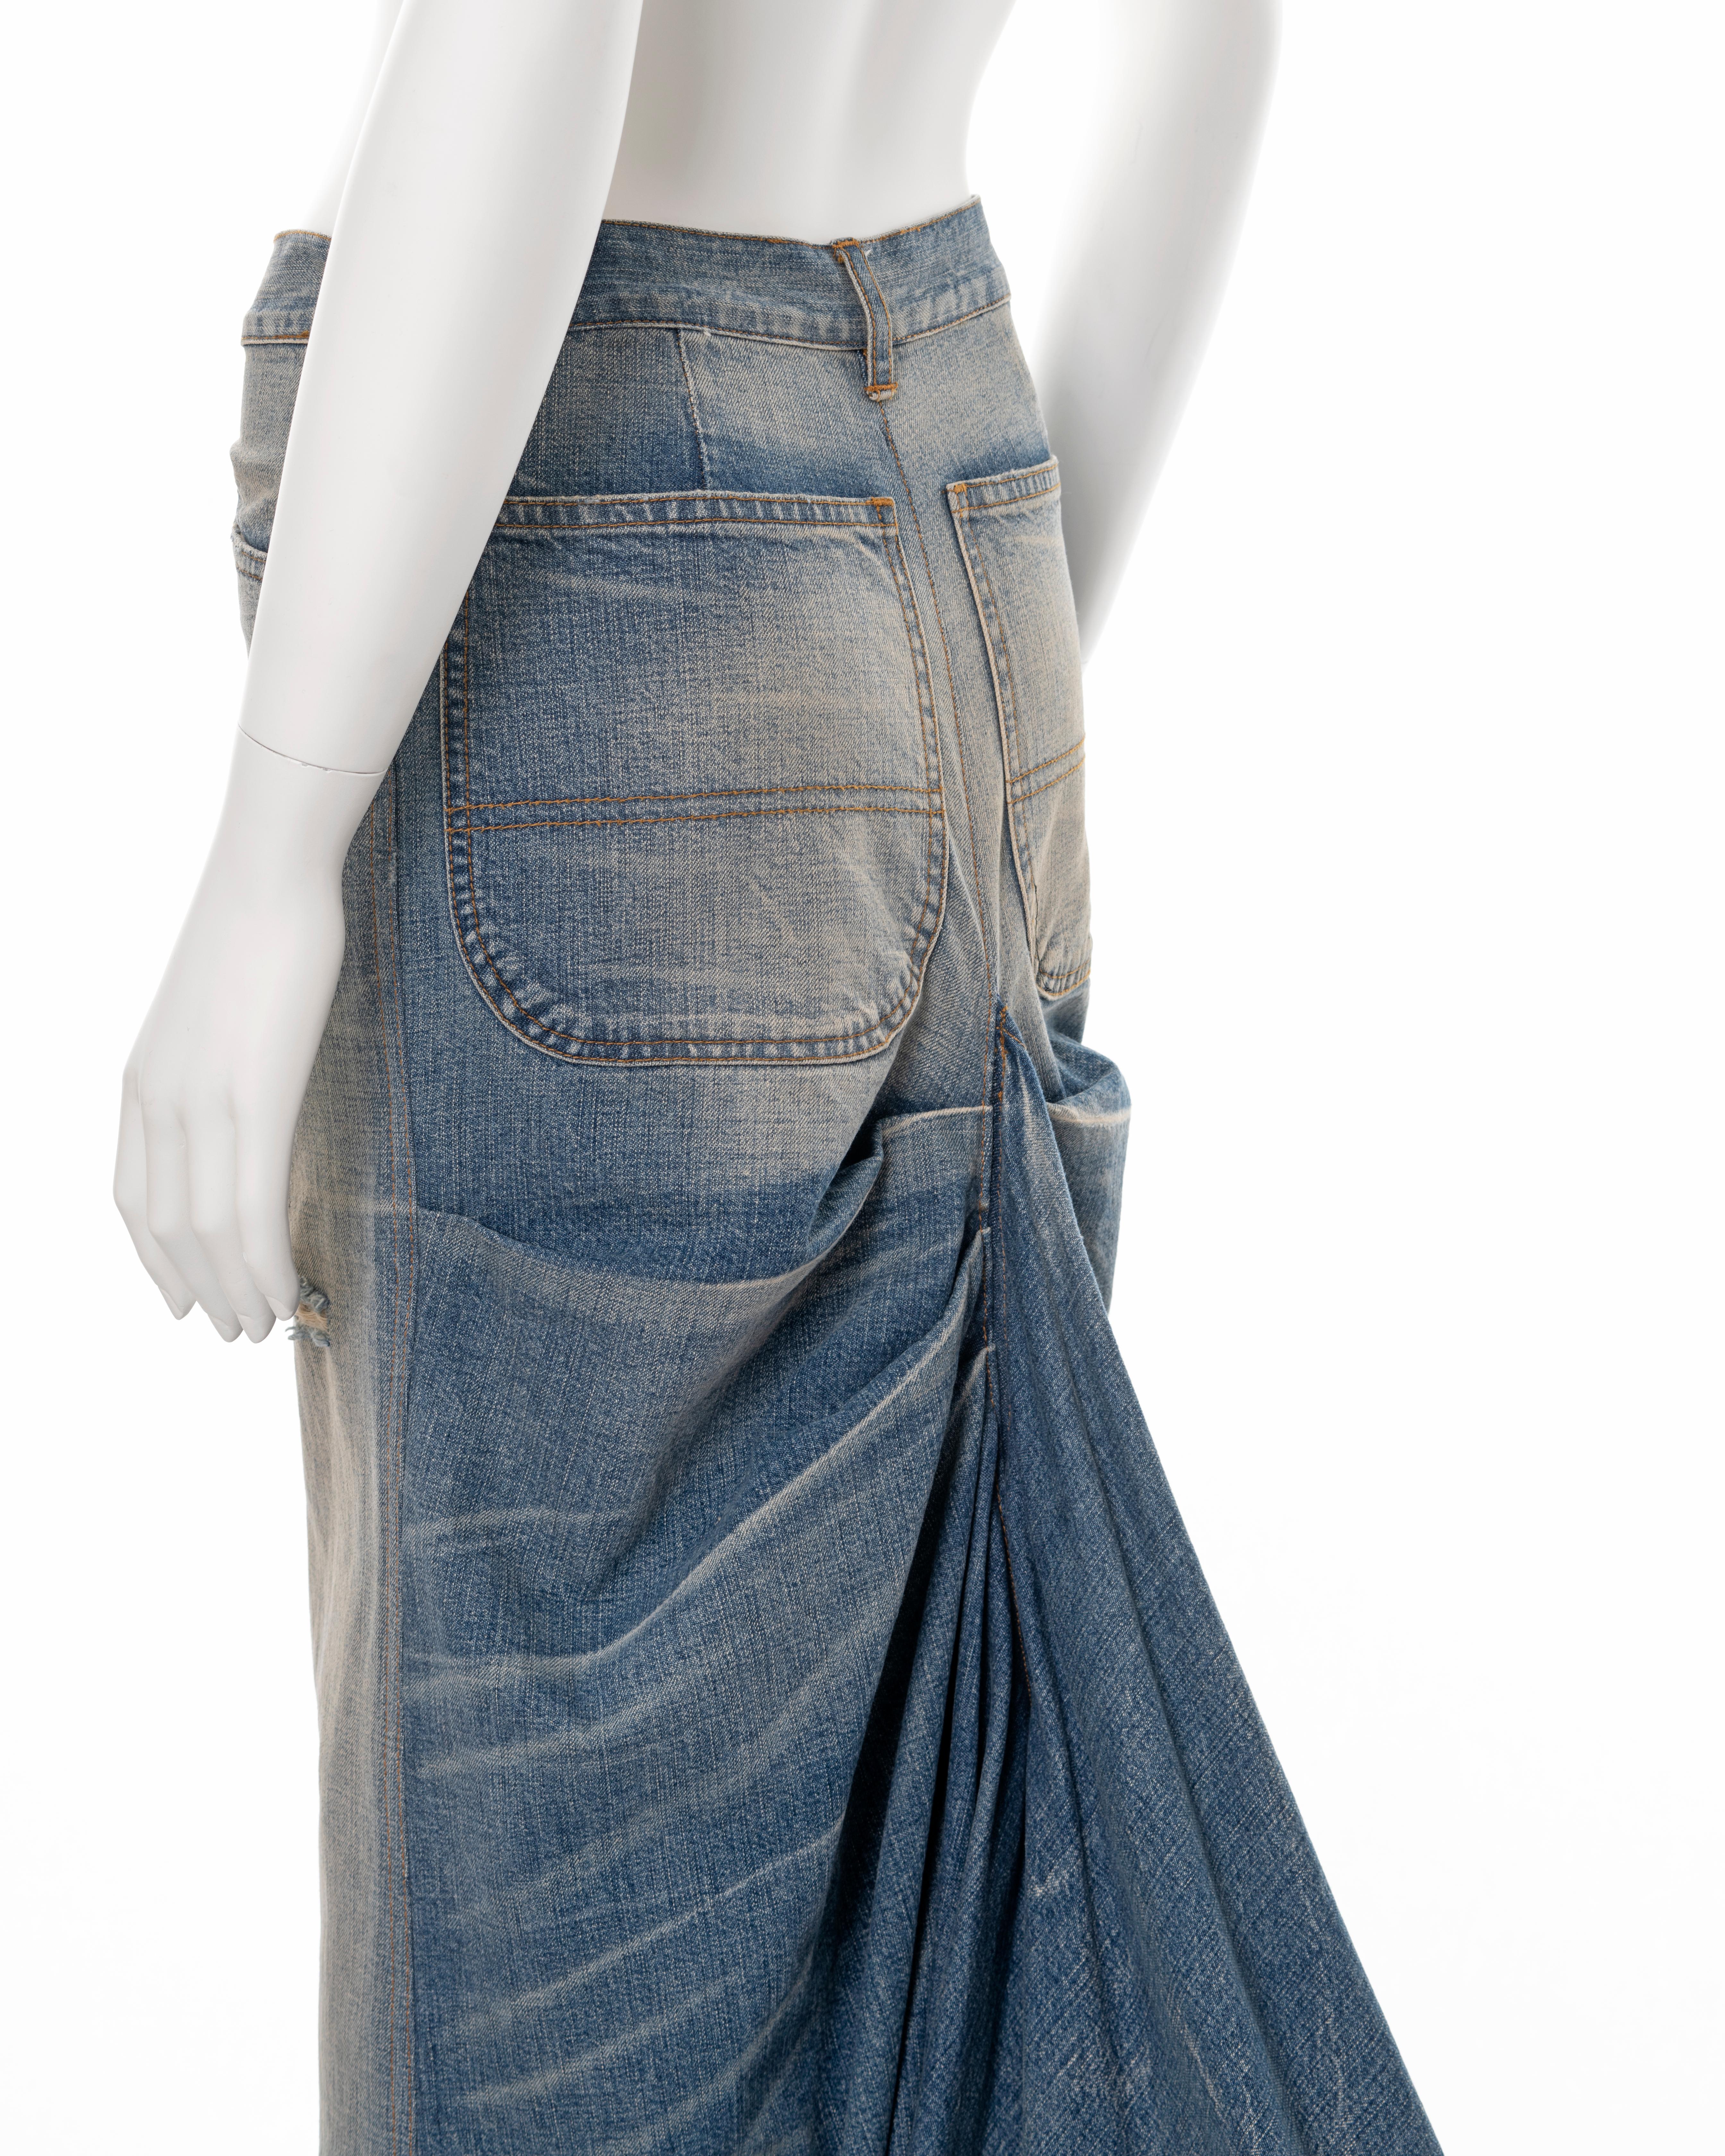 Ralph Lauren sandwashed denim maxi skirt with train, ss 2003 1